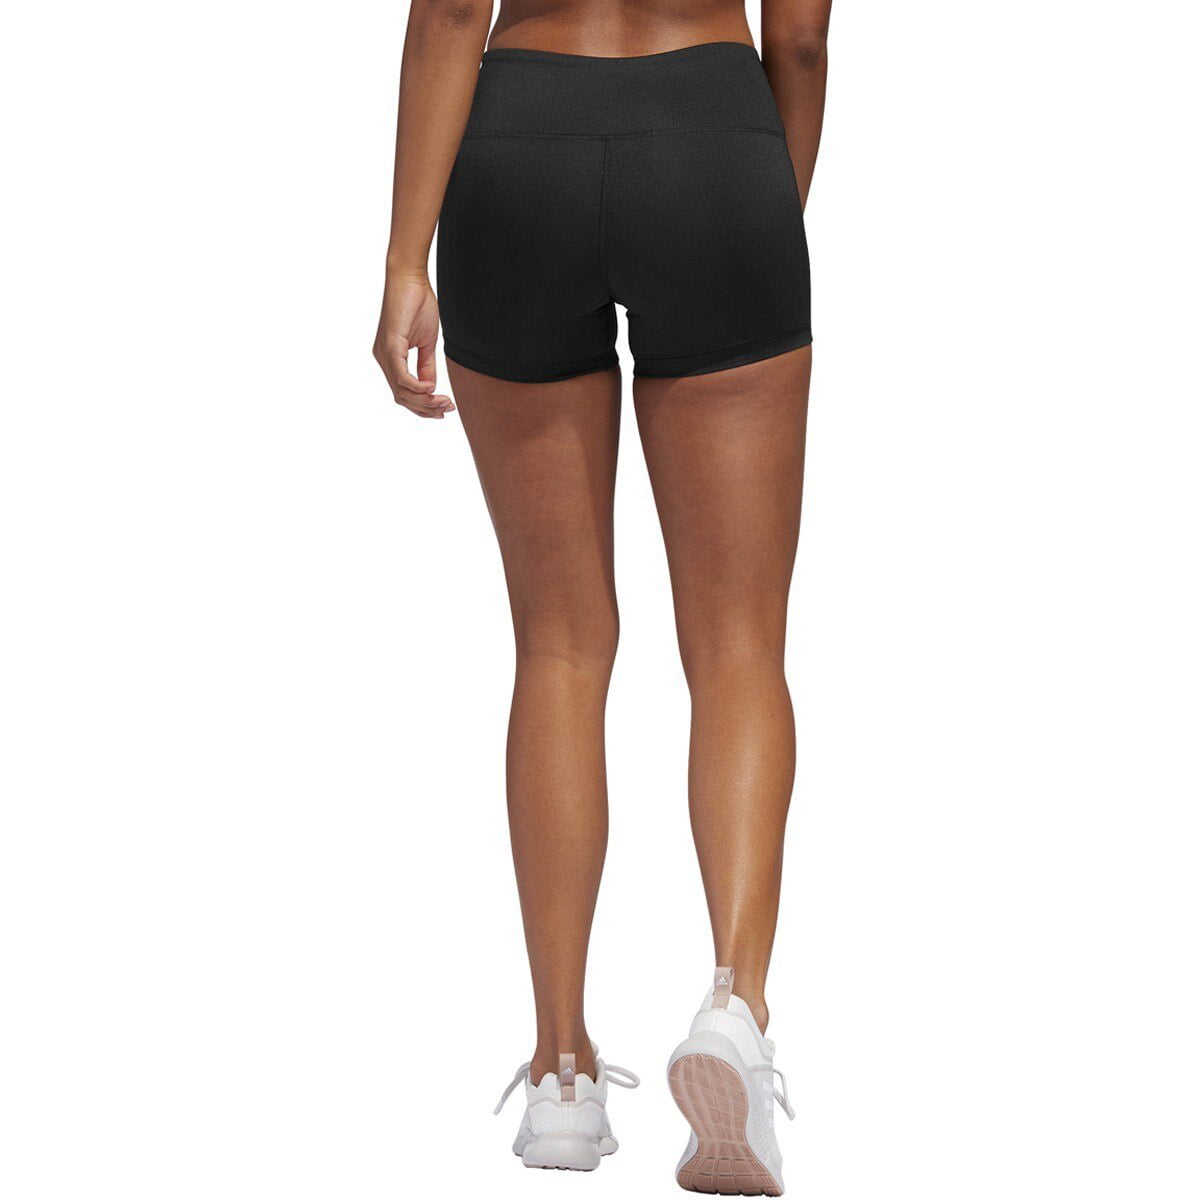 adidas 4 inch volleyball shorts